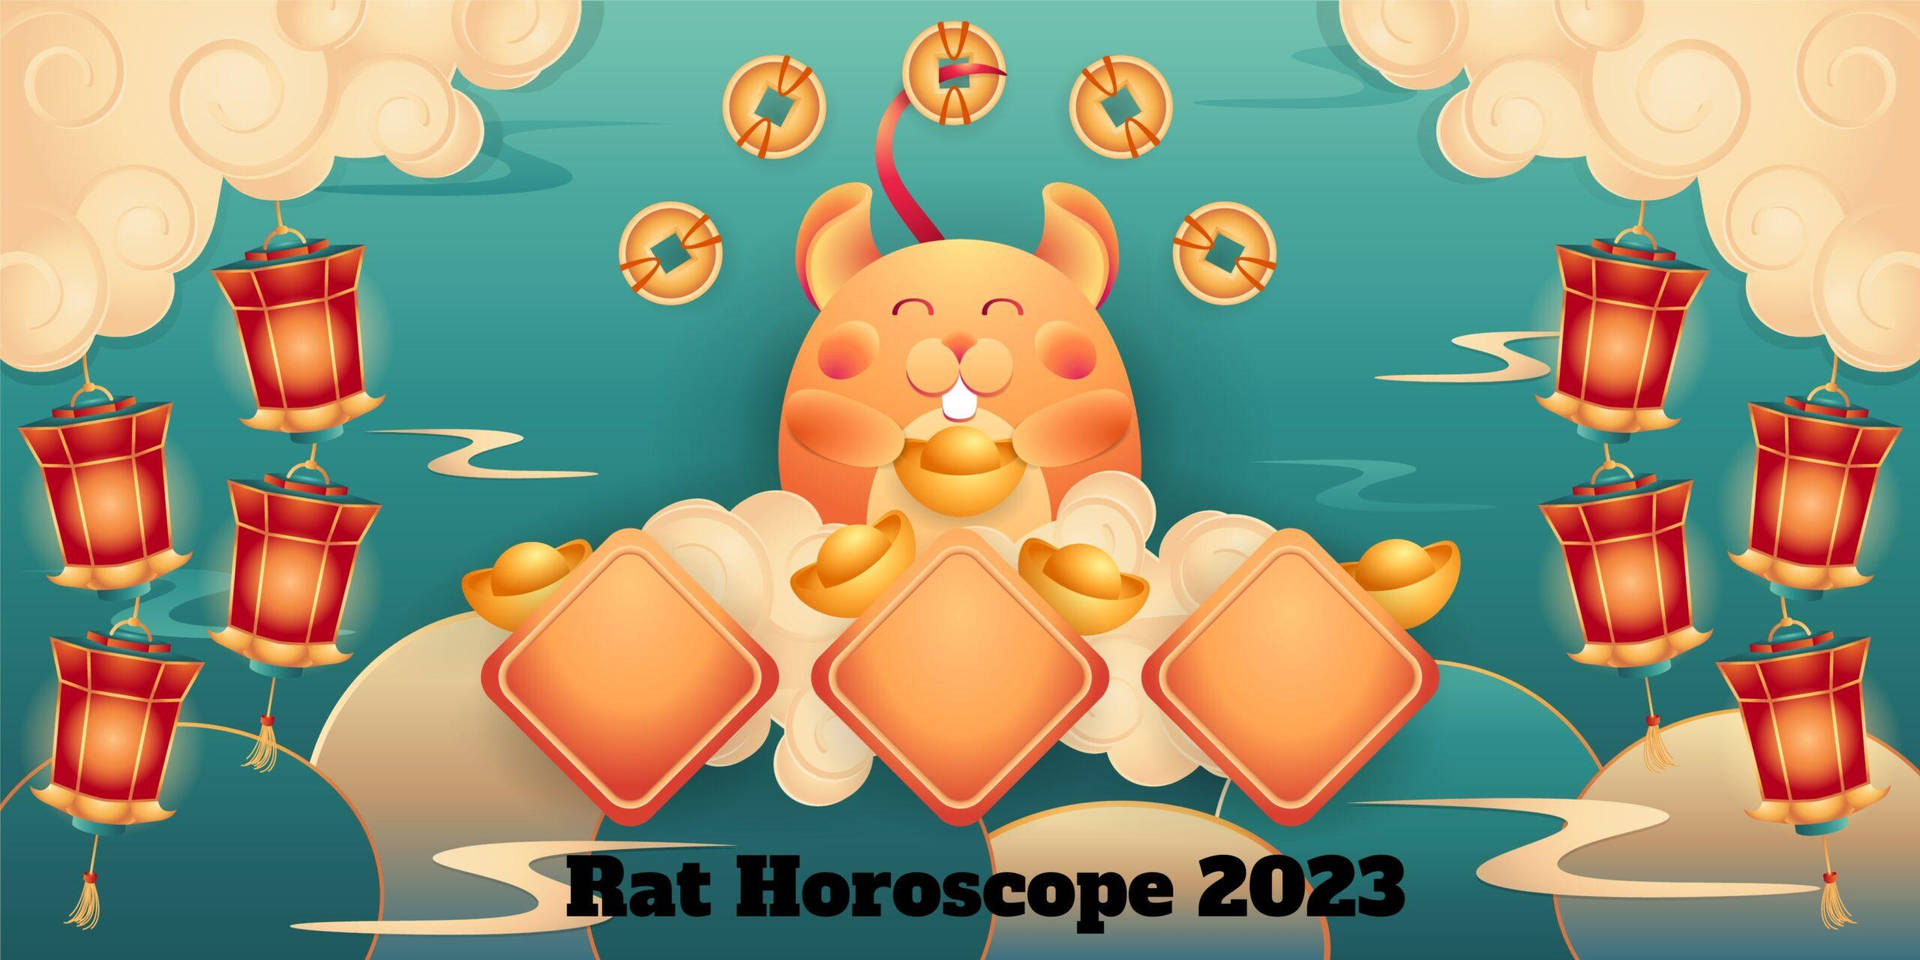 Rat Horoscope 2023 Wallpaper